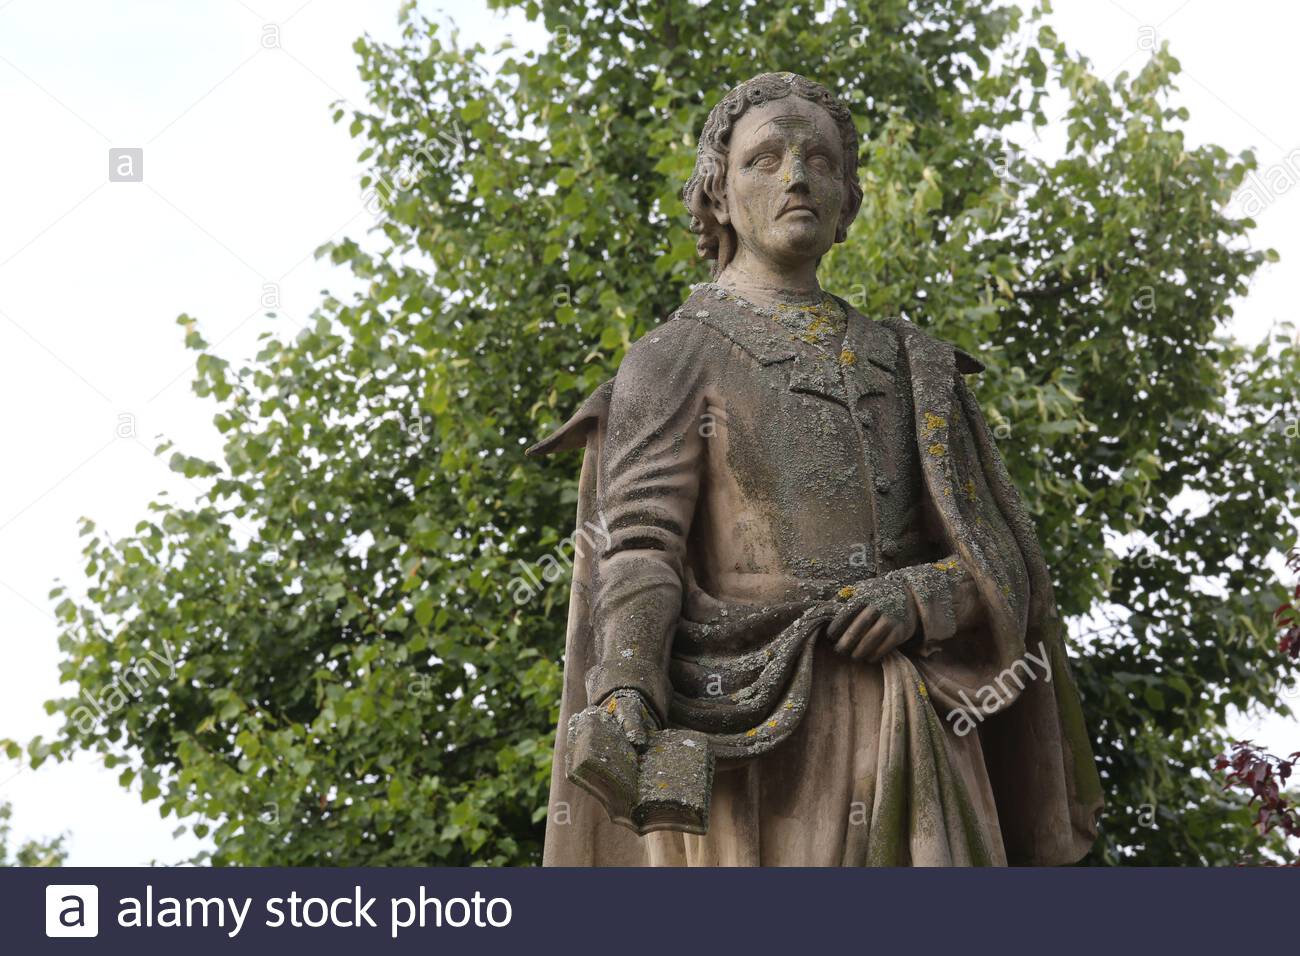 German philospher, author, academic and linguist Johann Kaspar Zeuss statue in Kronach Germany. Stock Photo